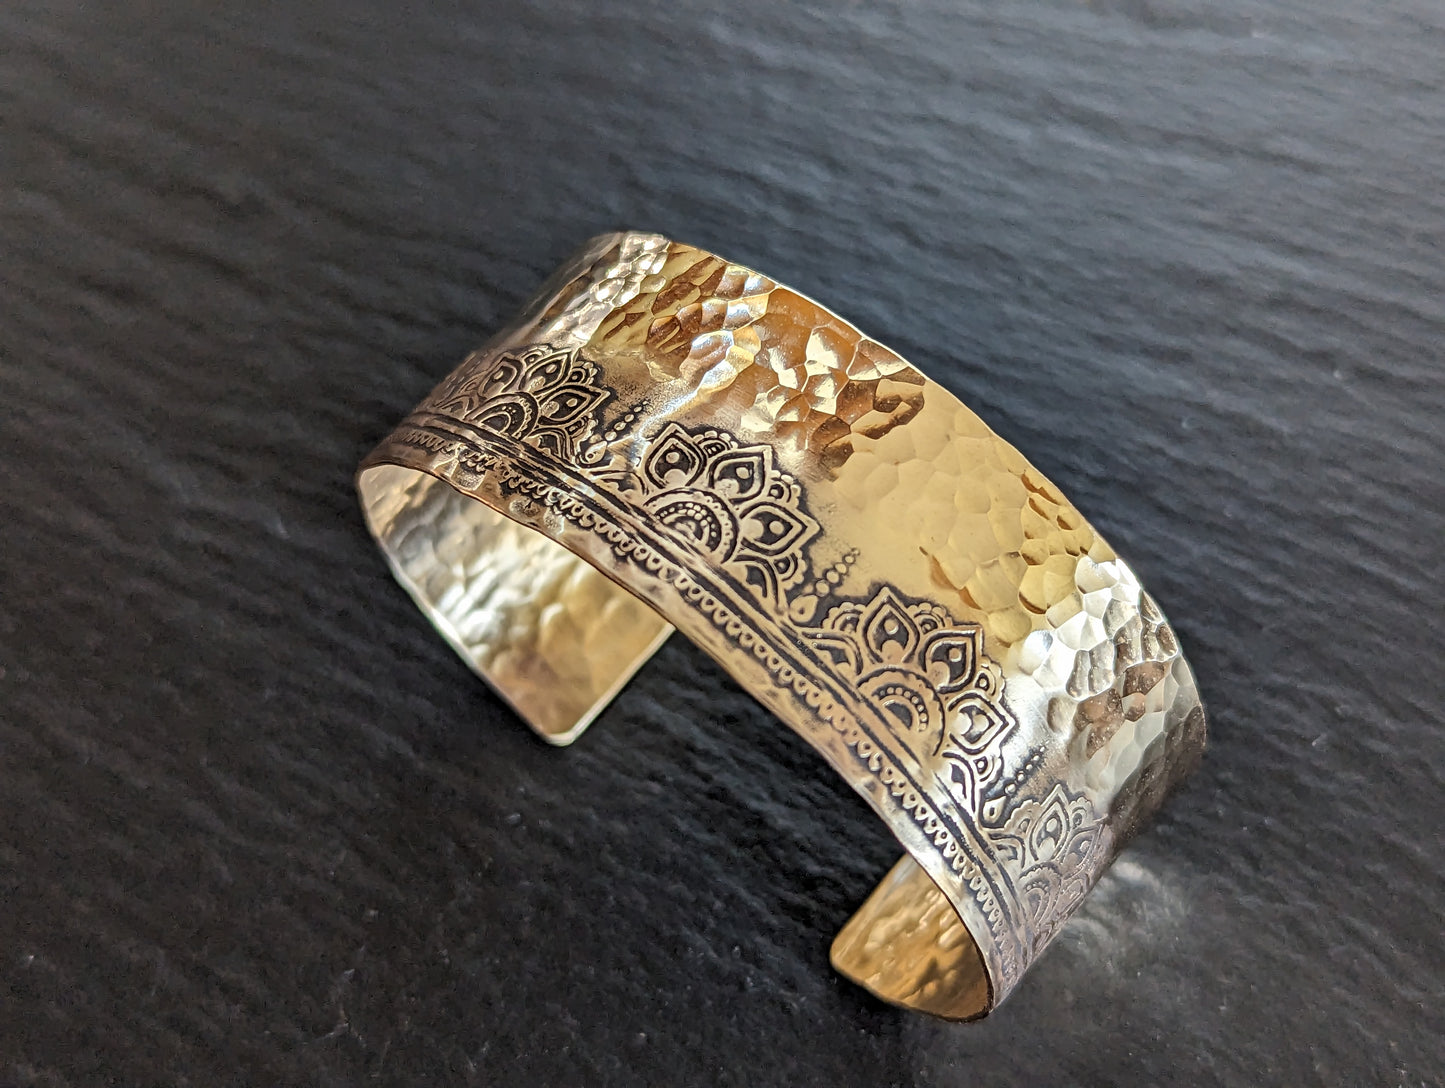 Mhendi mandala border cuff bracelet made from bronze - 1 inch wide